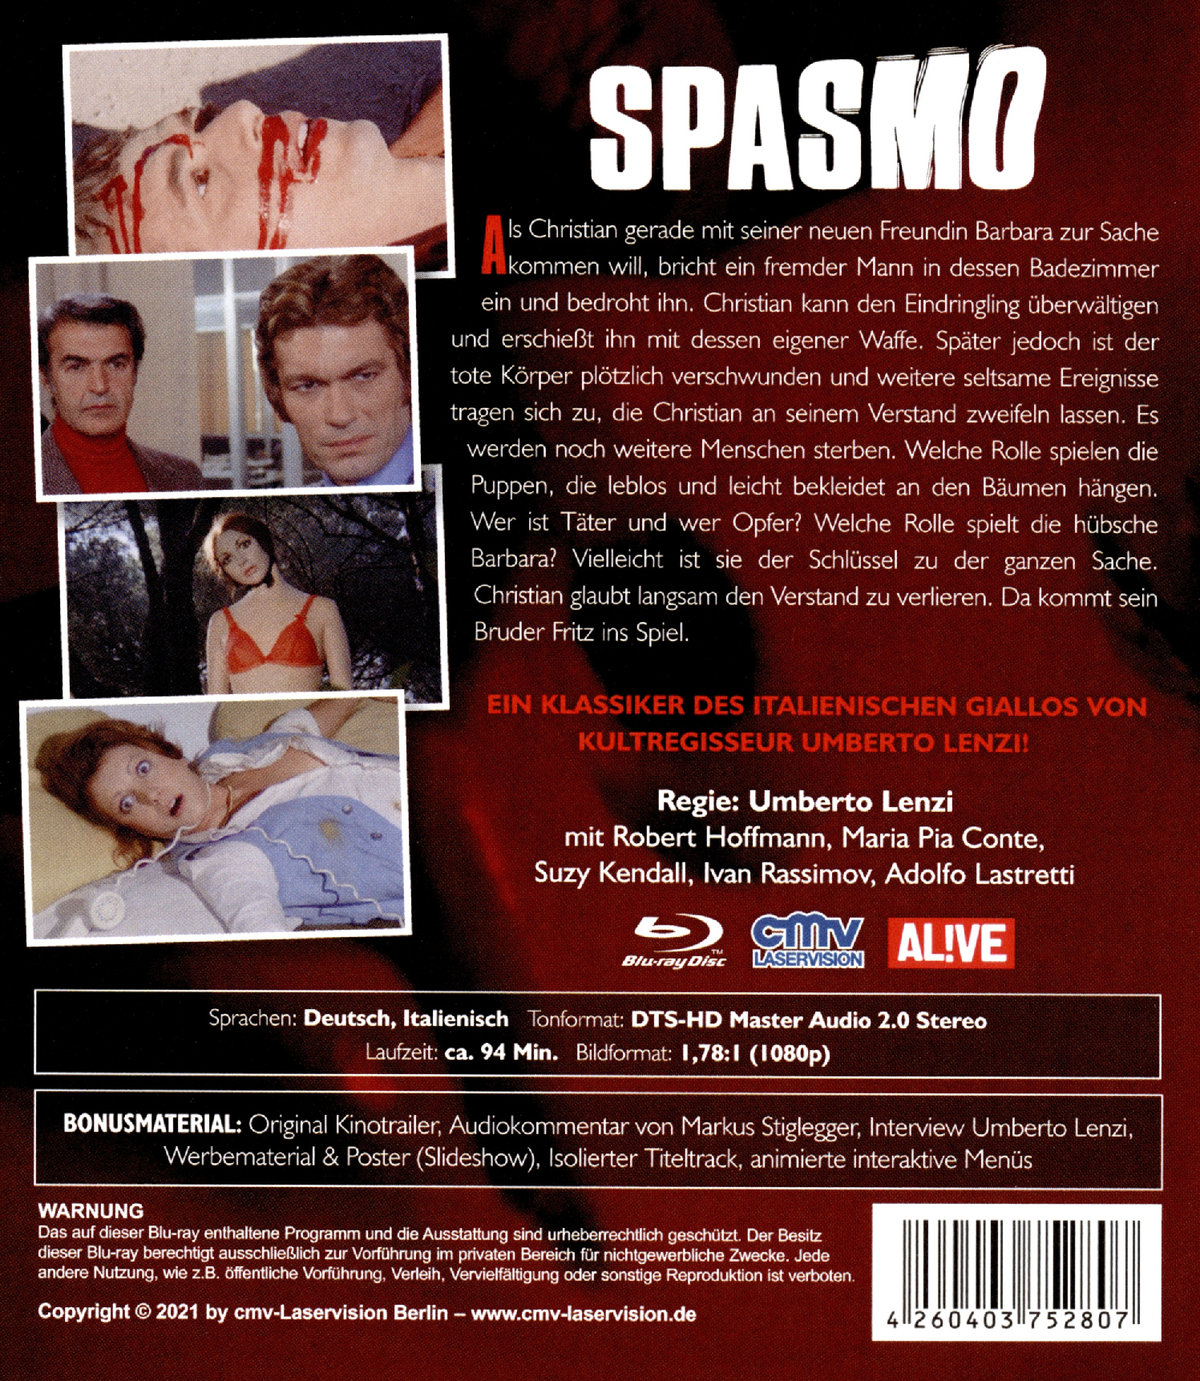 Spasmo - Uncut Edition (blu-ray)